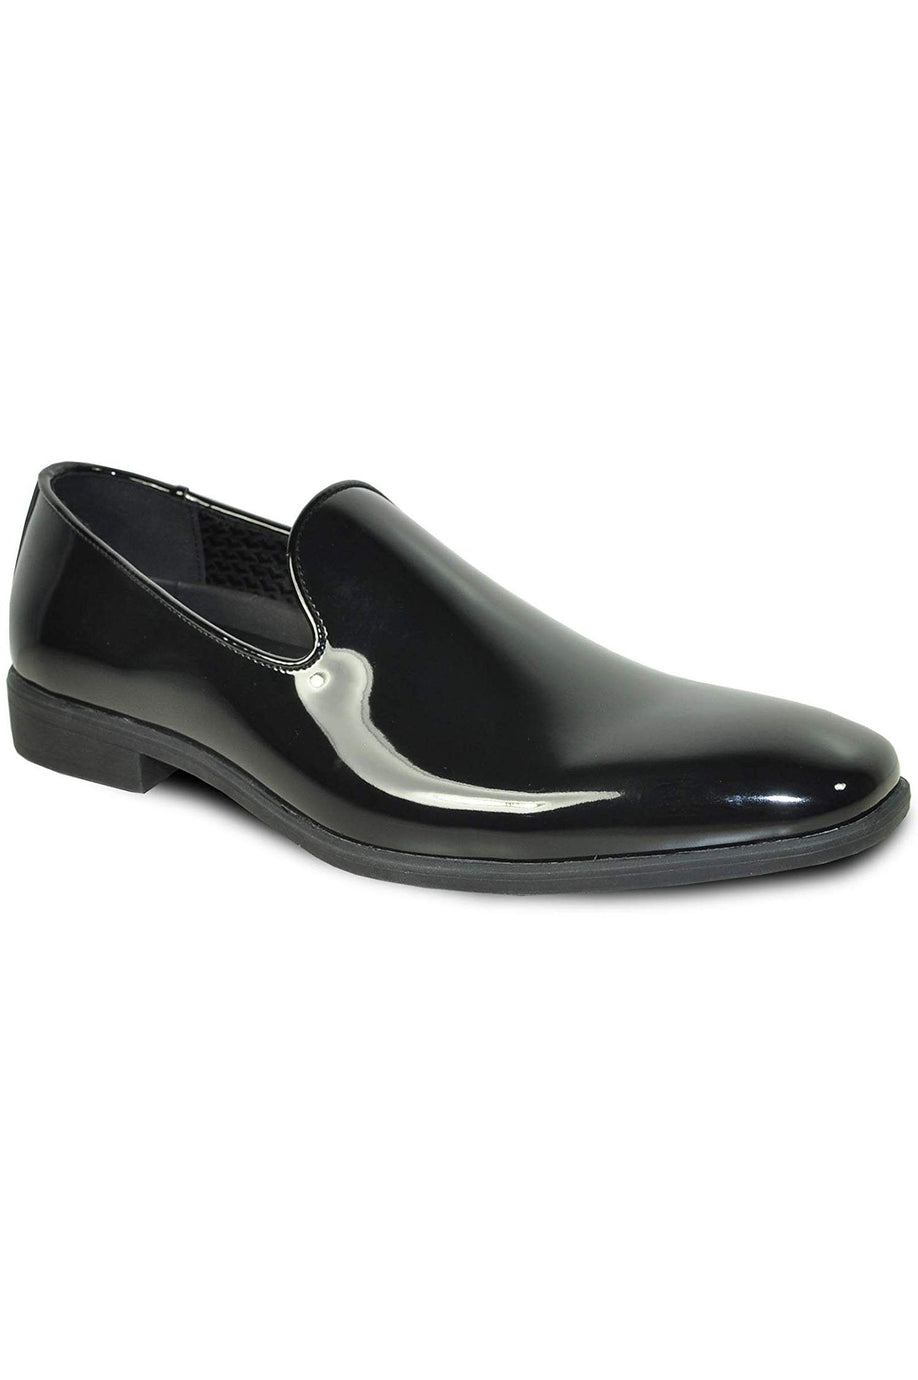 Vangelo "Galileo" Black Tuxedo Shoes